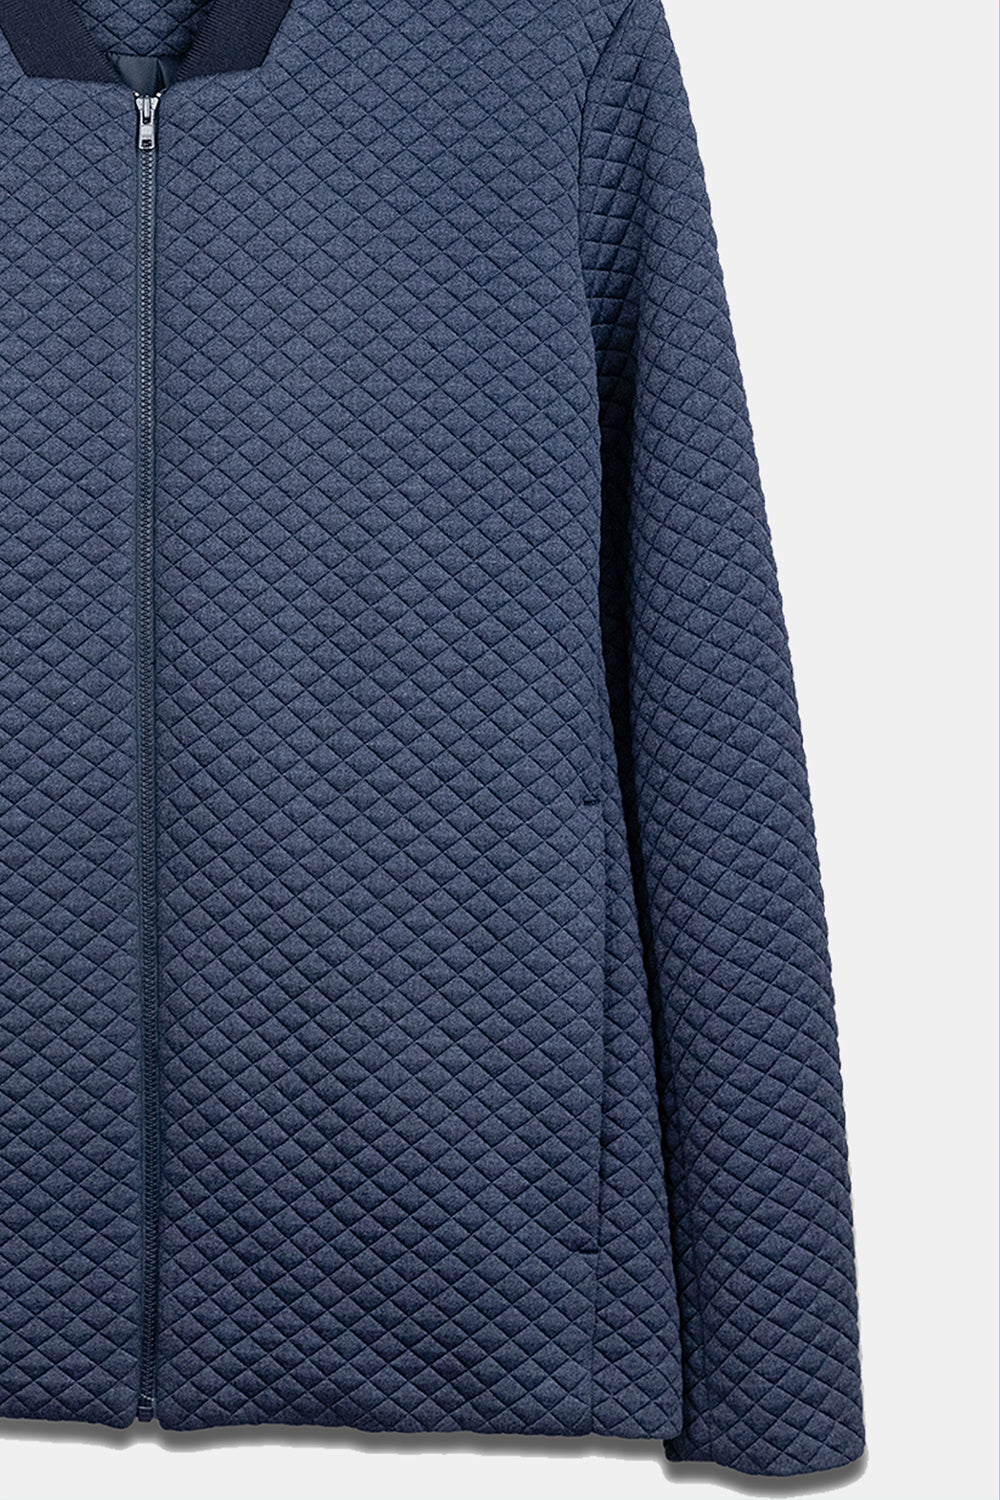 SEANNUNG - MEN - Diamond Rib Formal Sports jacket  鑽石壓紋正裝運動外套